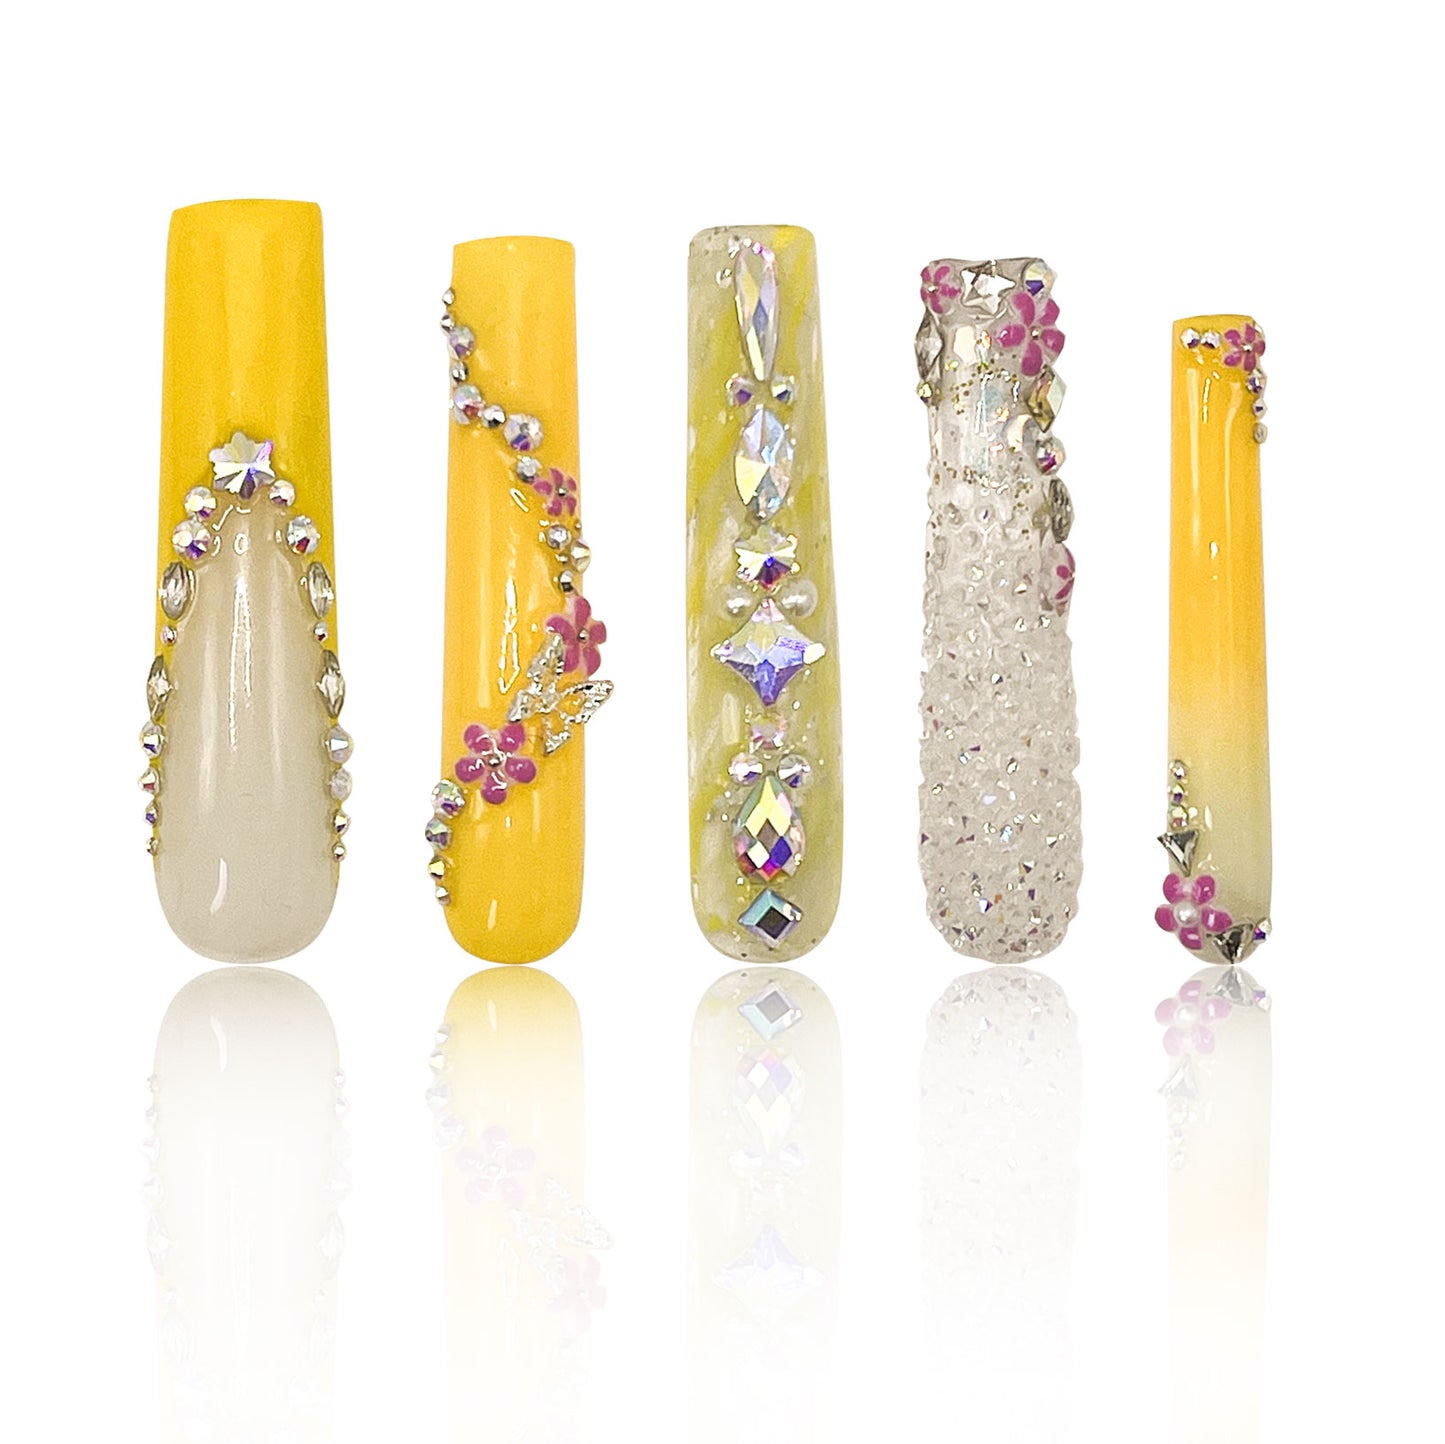 LH45 Handmade Elegant Spring Press on Nails Customize